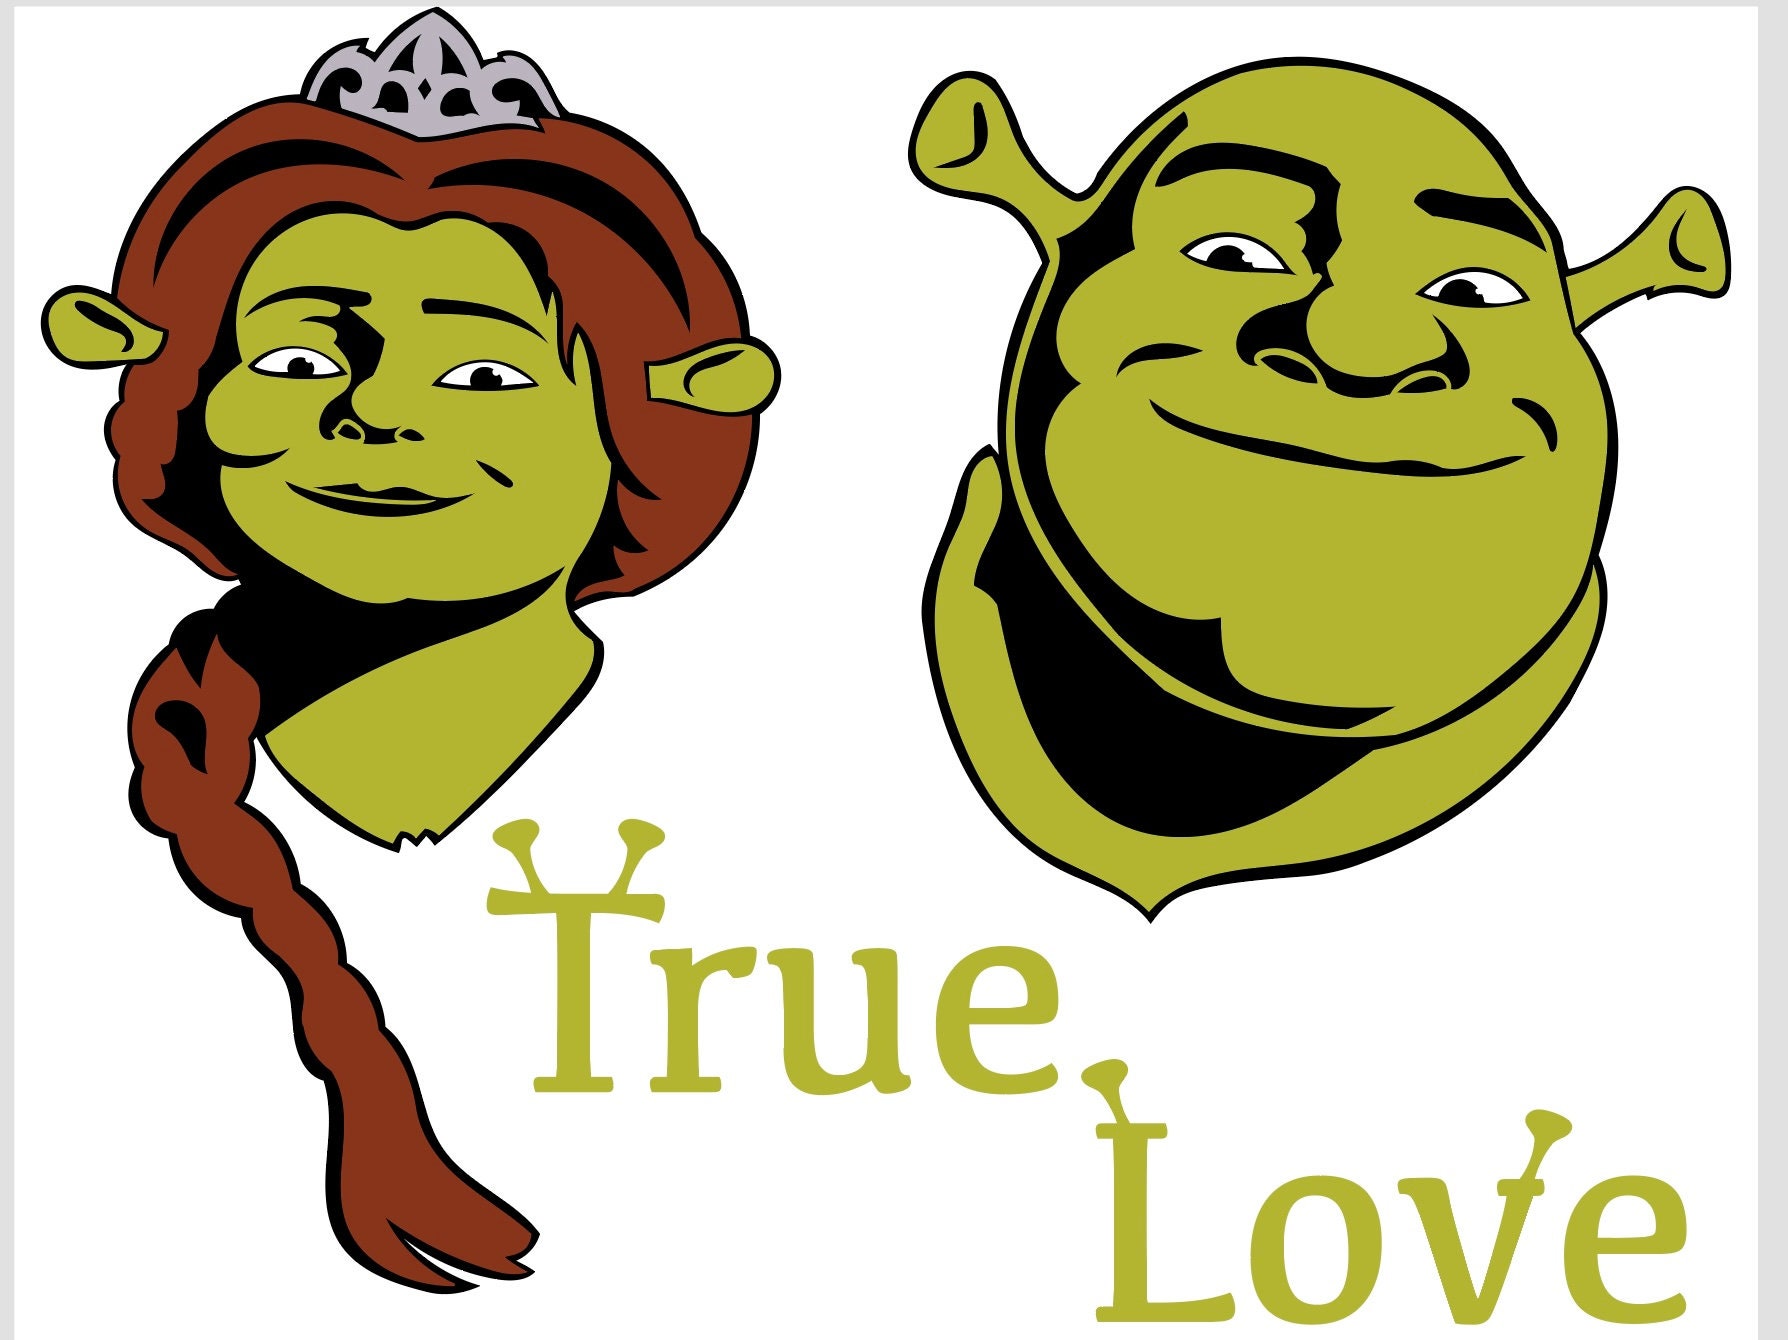 Cartoon Characters: Madagascar and Shrek (PNG)